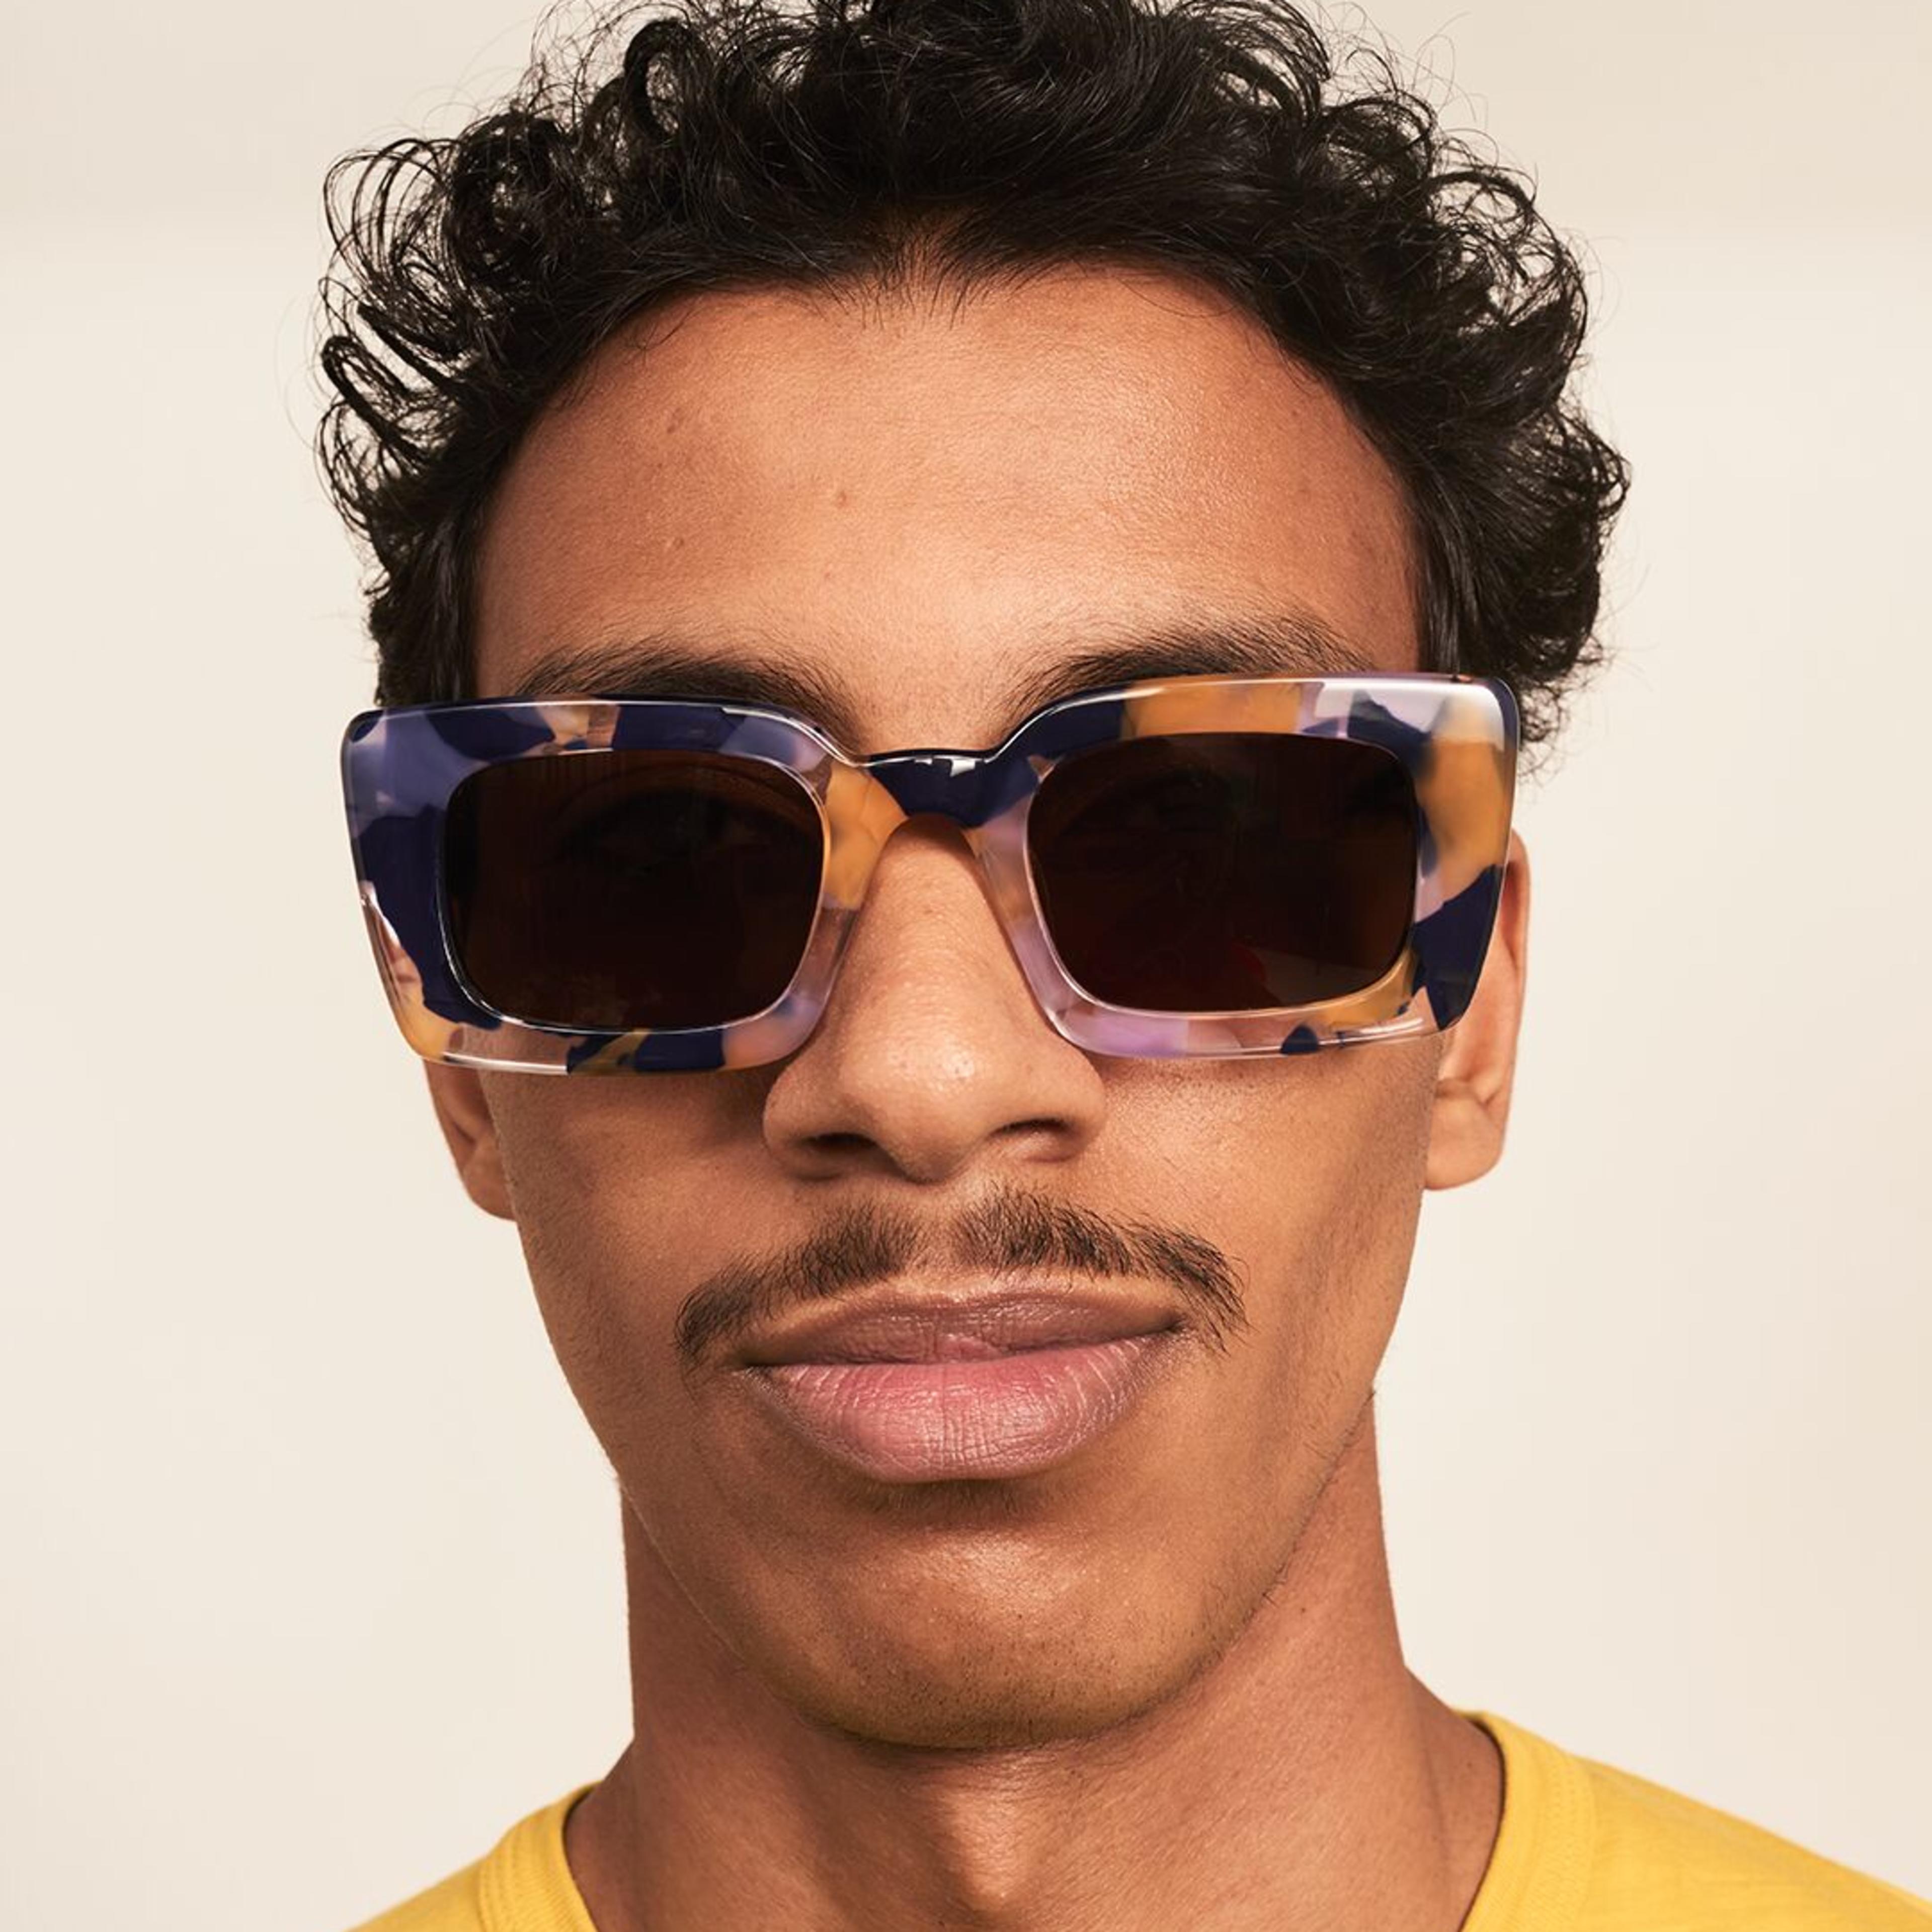 Ace & Tate Sunglasses | rectangle Acetate in Brown, Orange, Purple